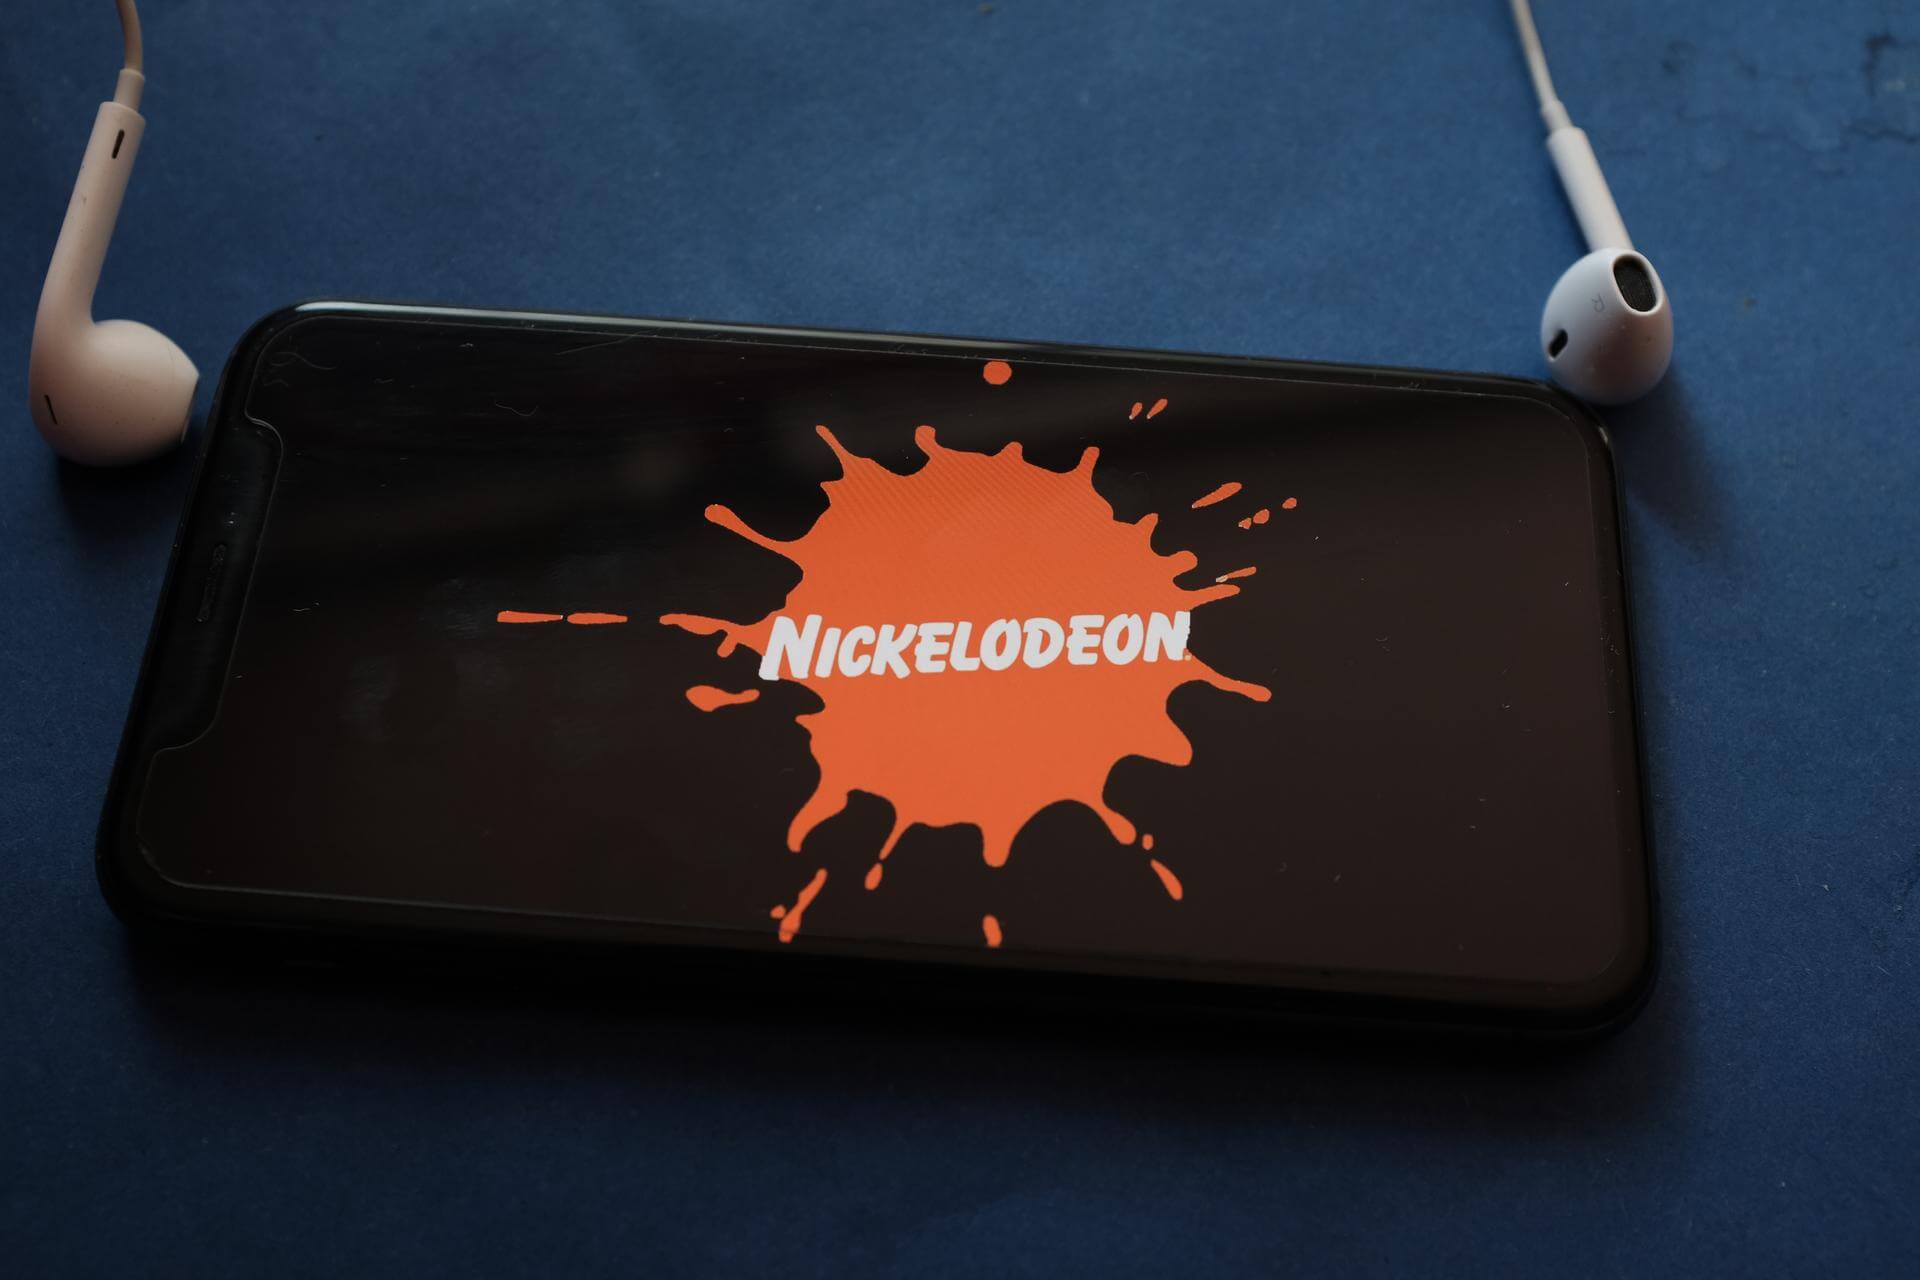 nickelodeon app windows 10